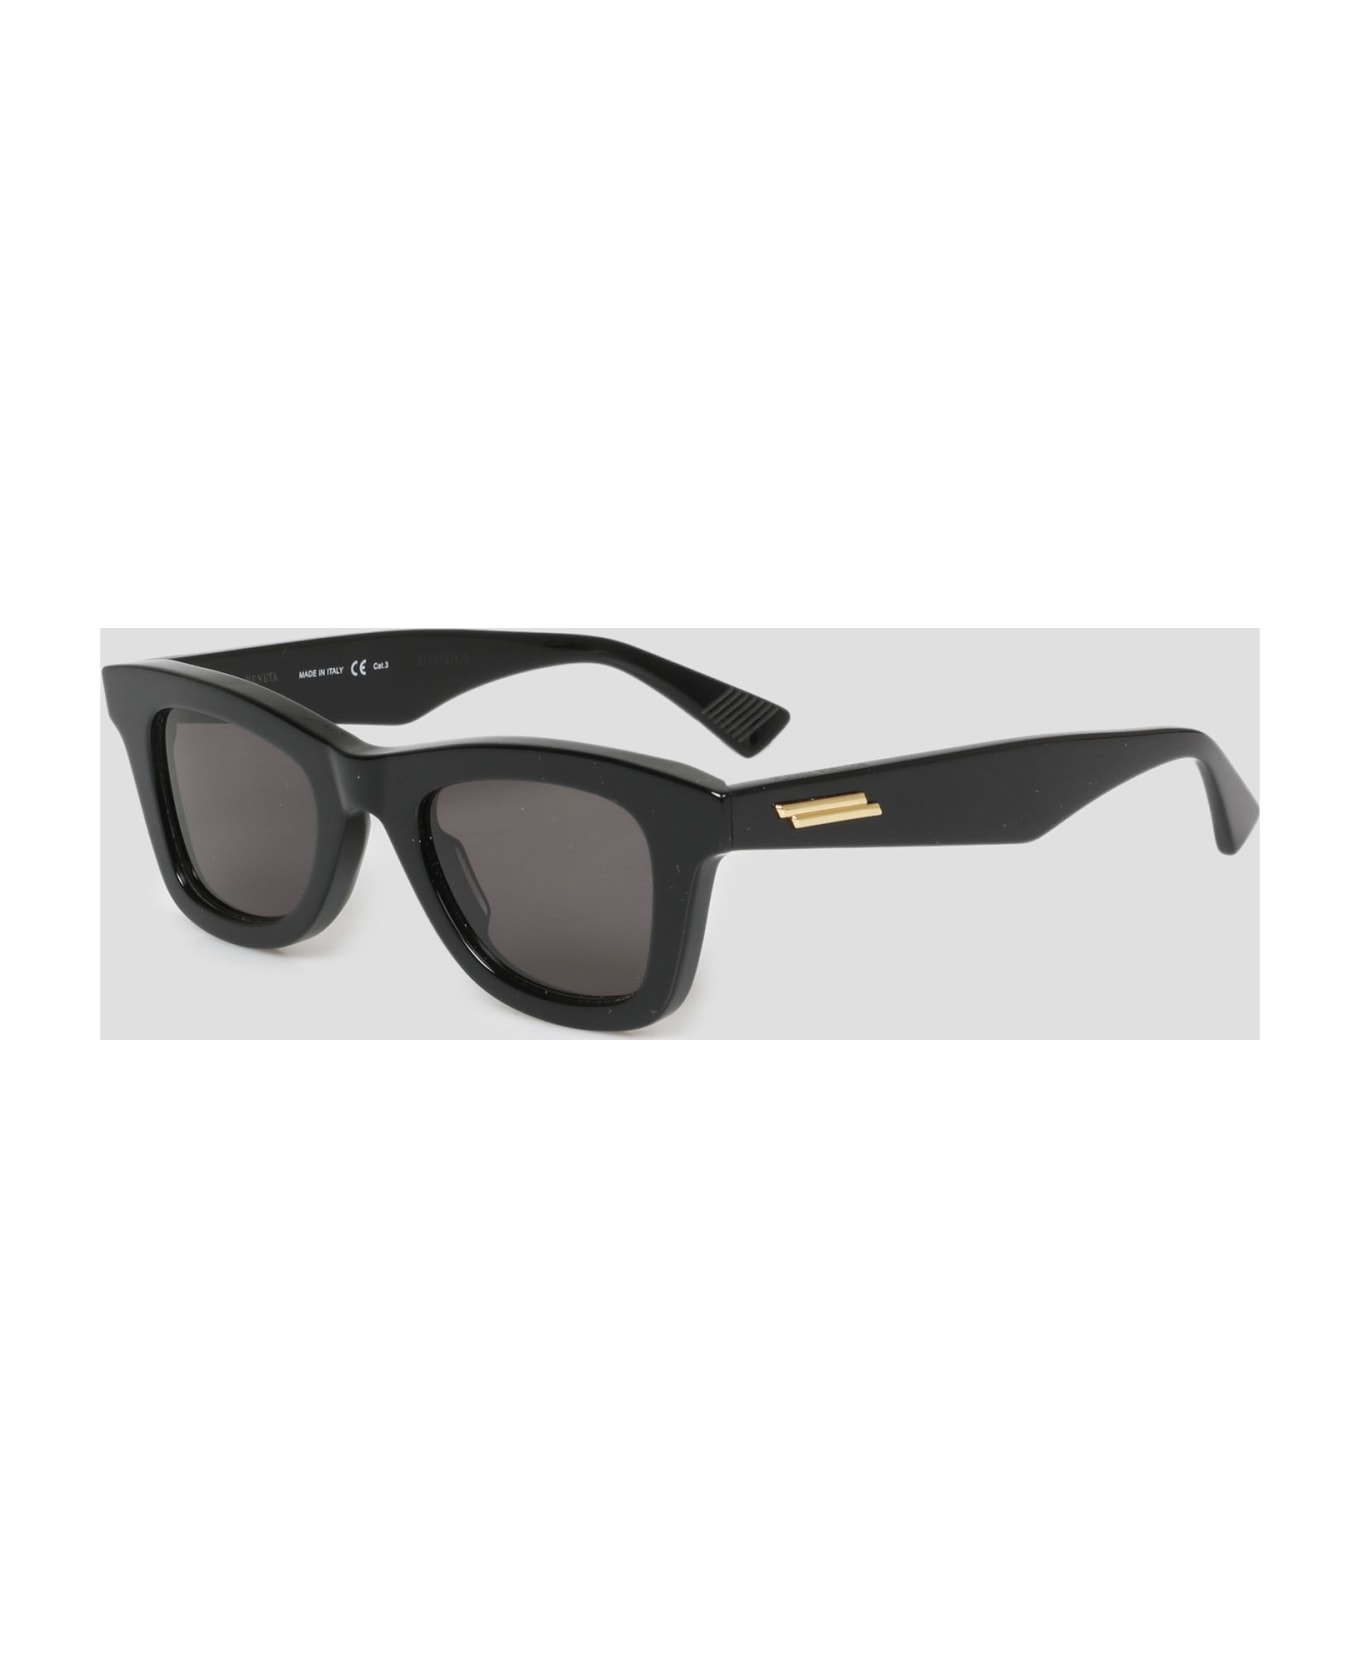 Bottega Veneta Eyewear Classic Sunglasses - Black アイウェア